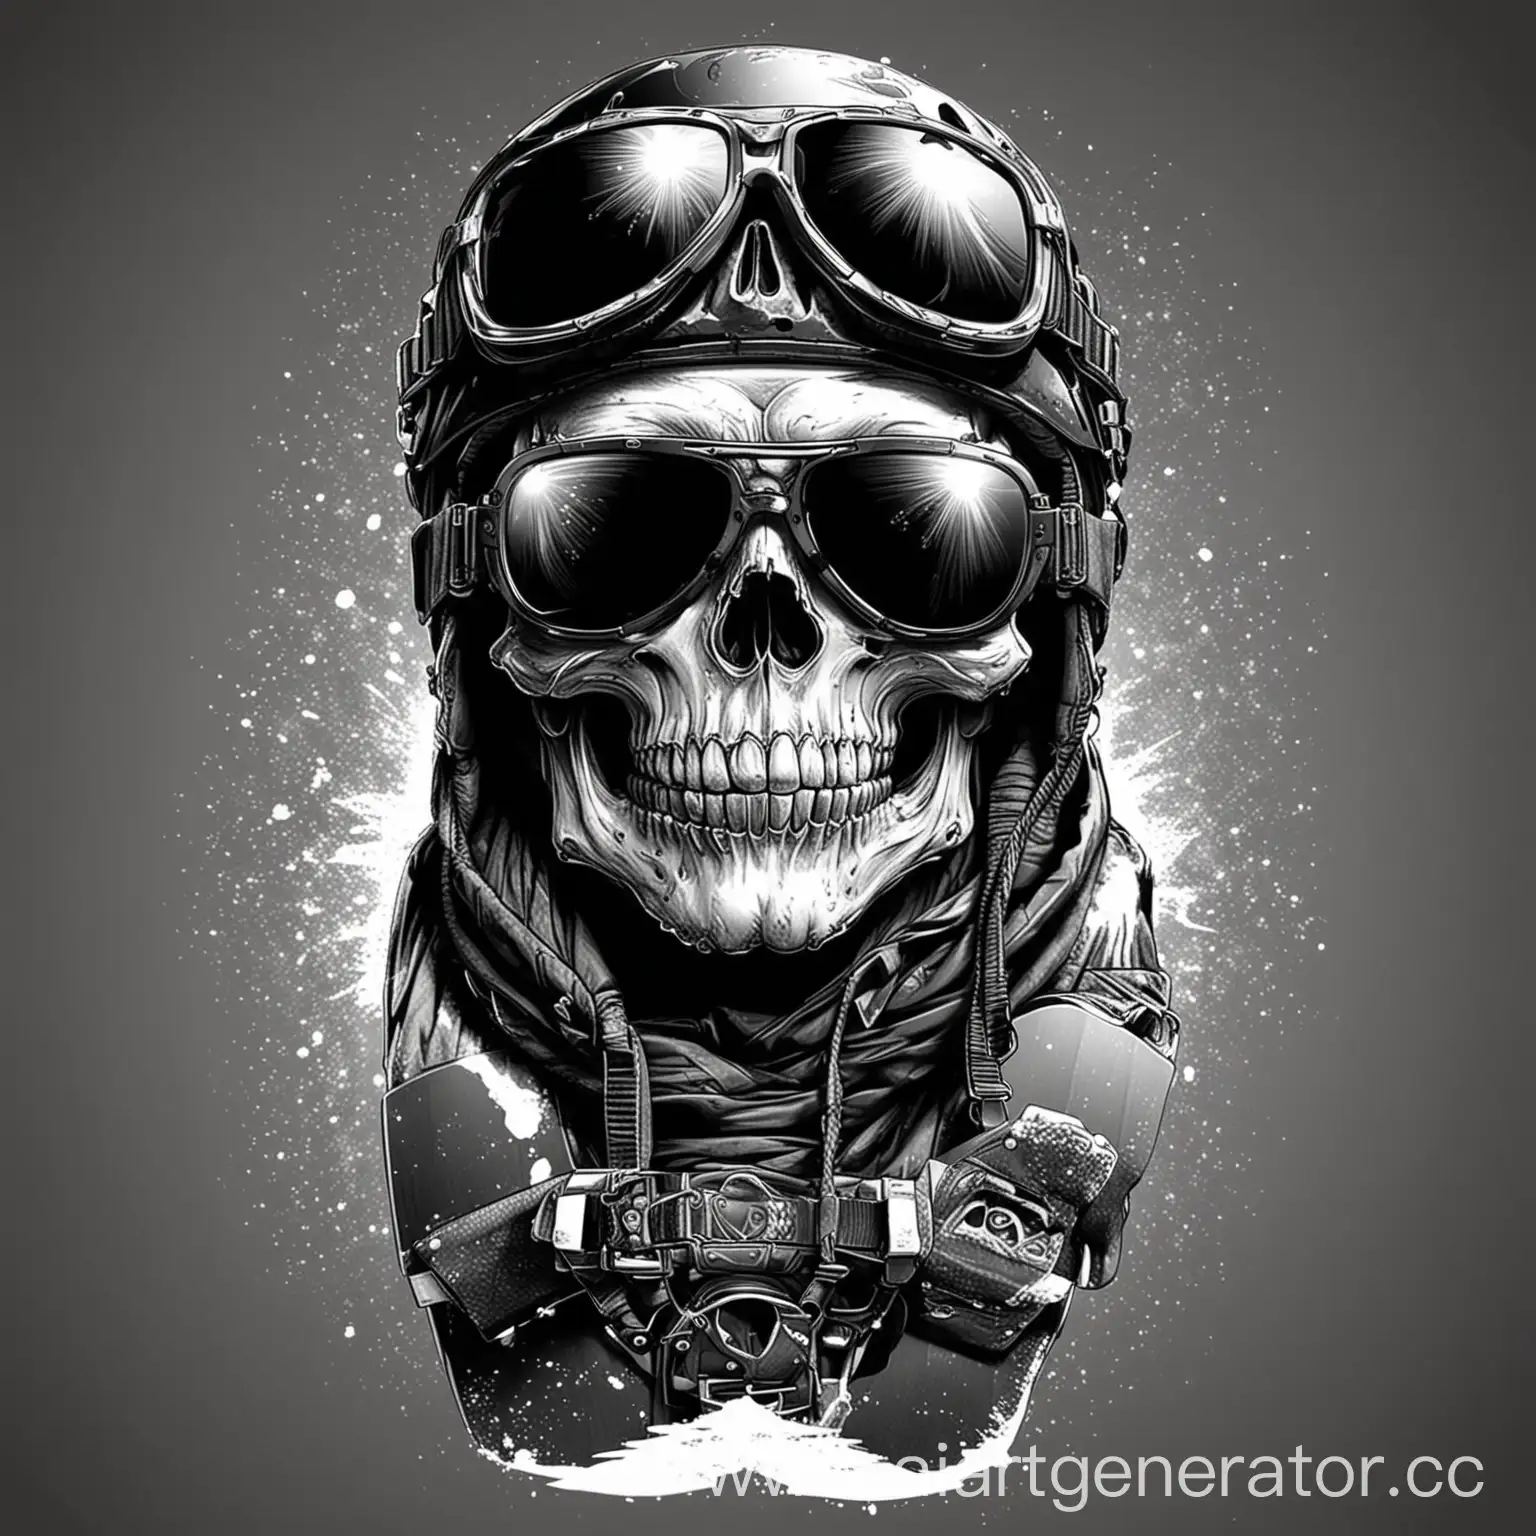 Skull-Snowboarder-in-Helmet-and-Sunglasses-Monochrome-Vector-Illustration